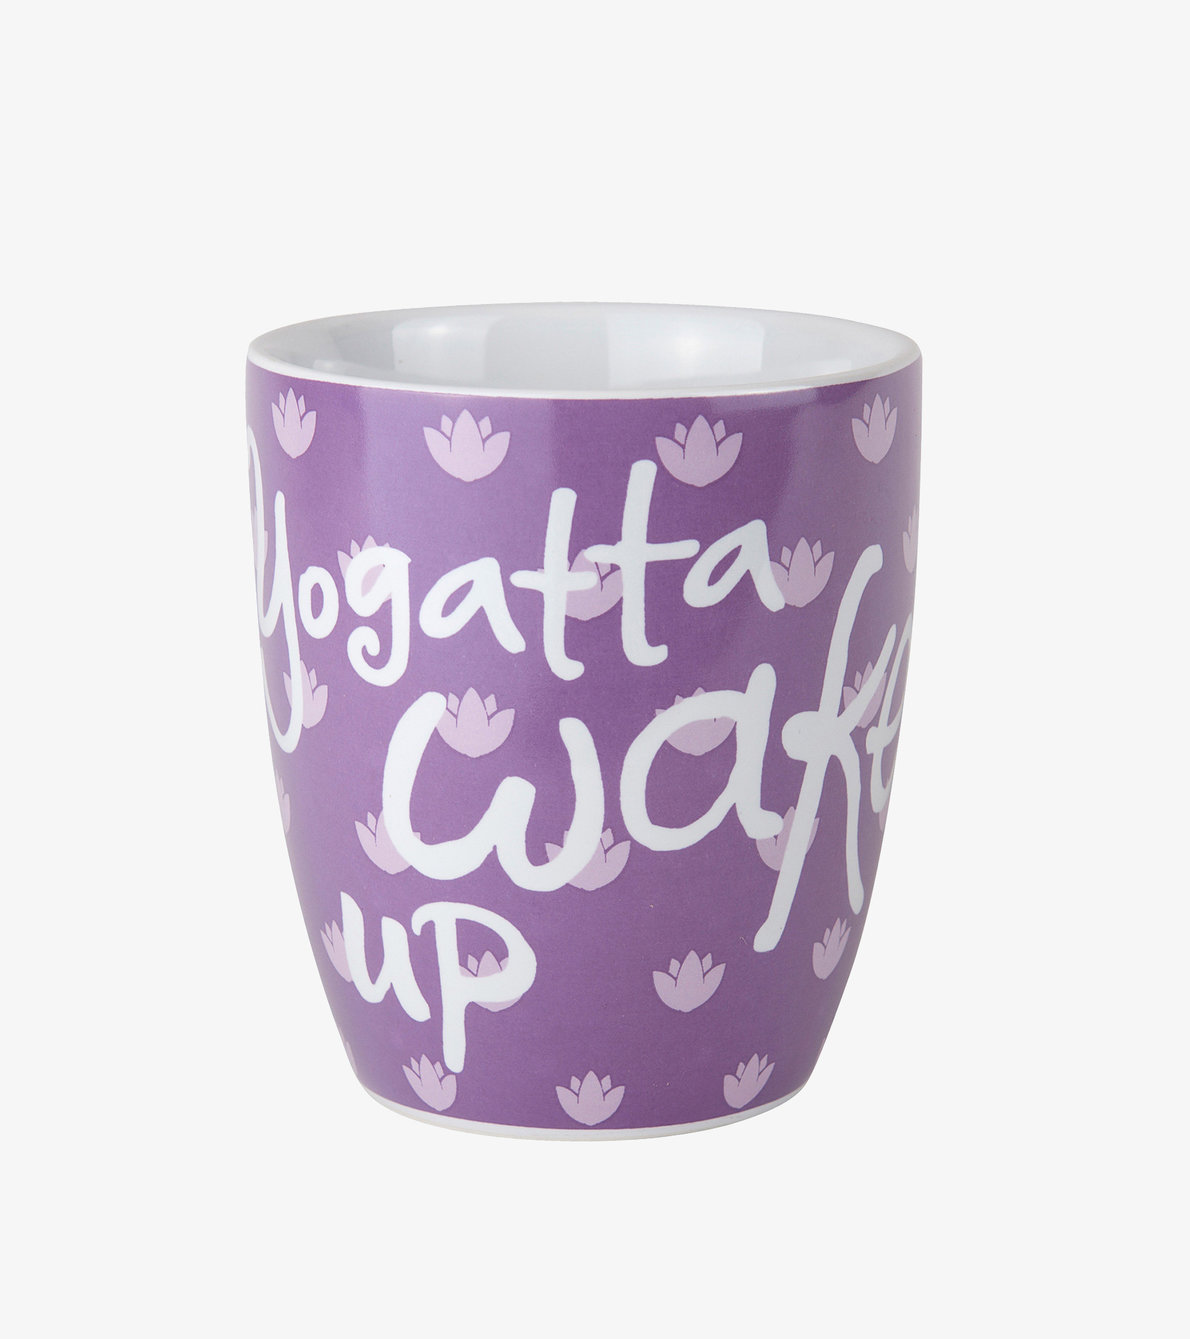 View larger image of Yogatta Wake Up Curved Ceramic Mug